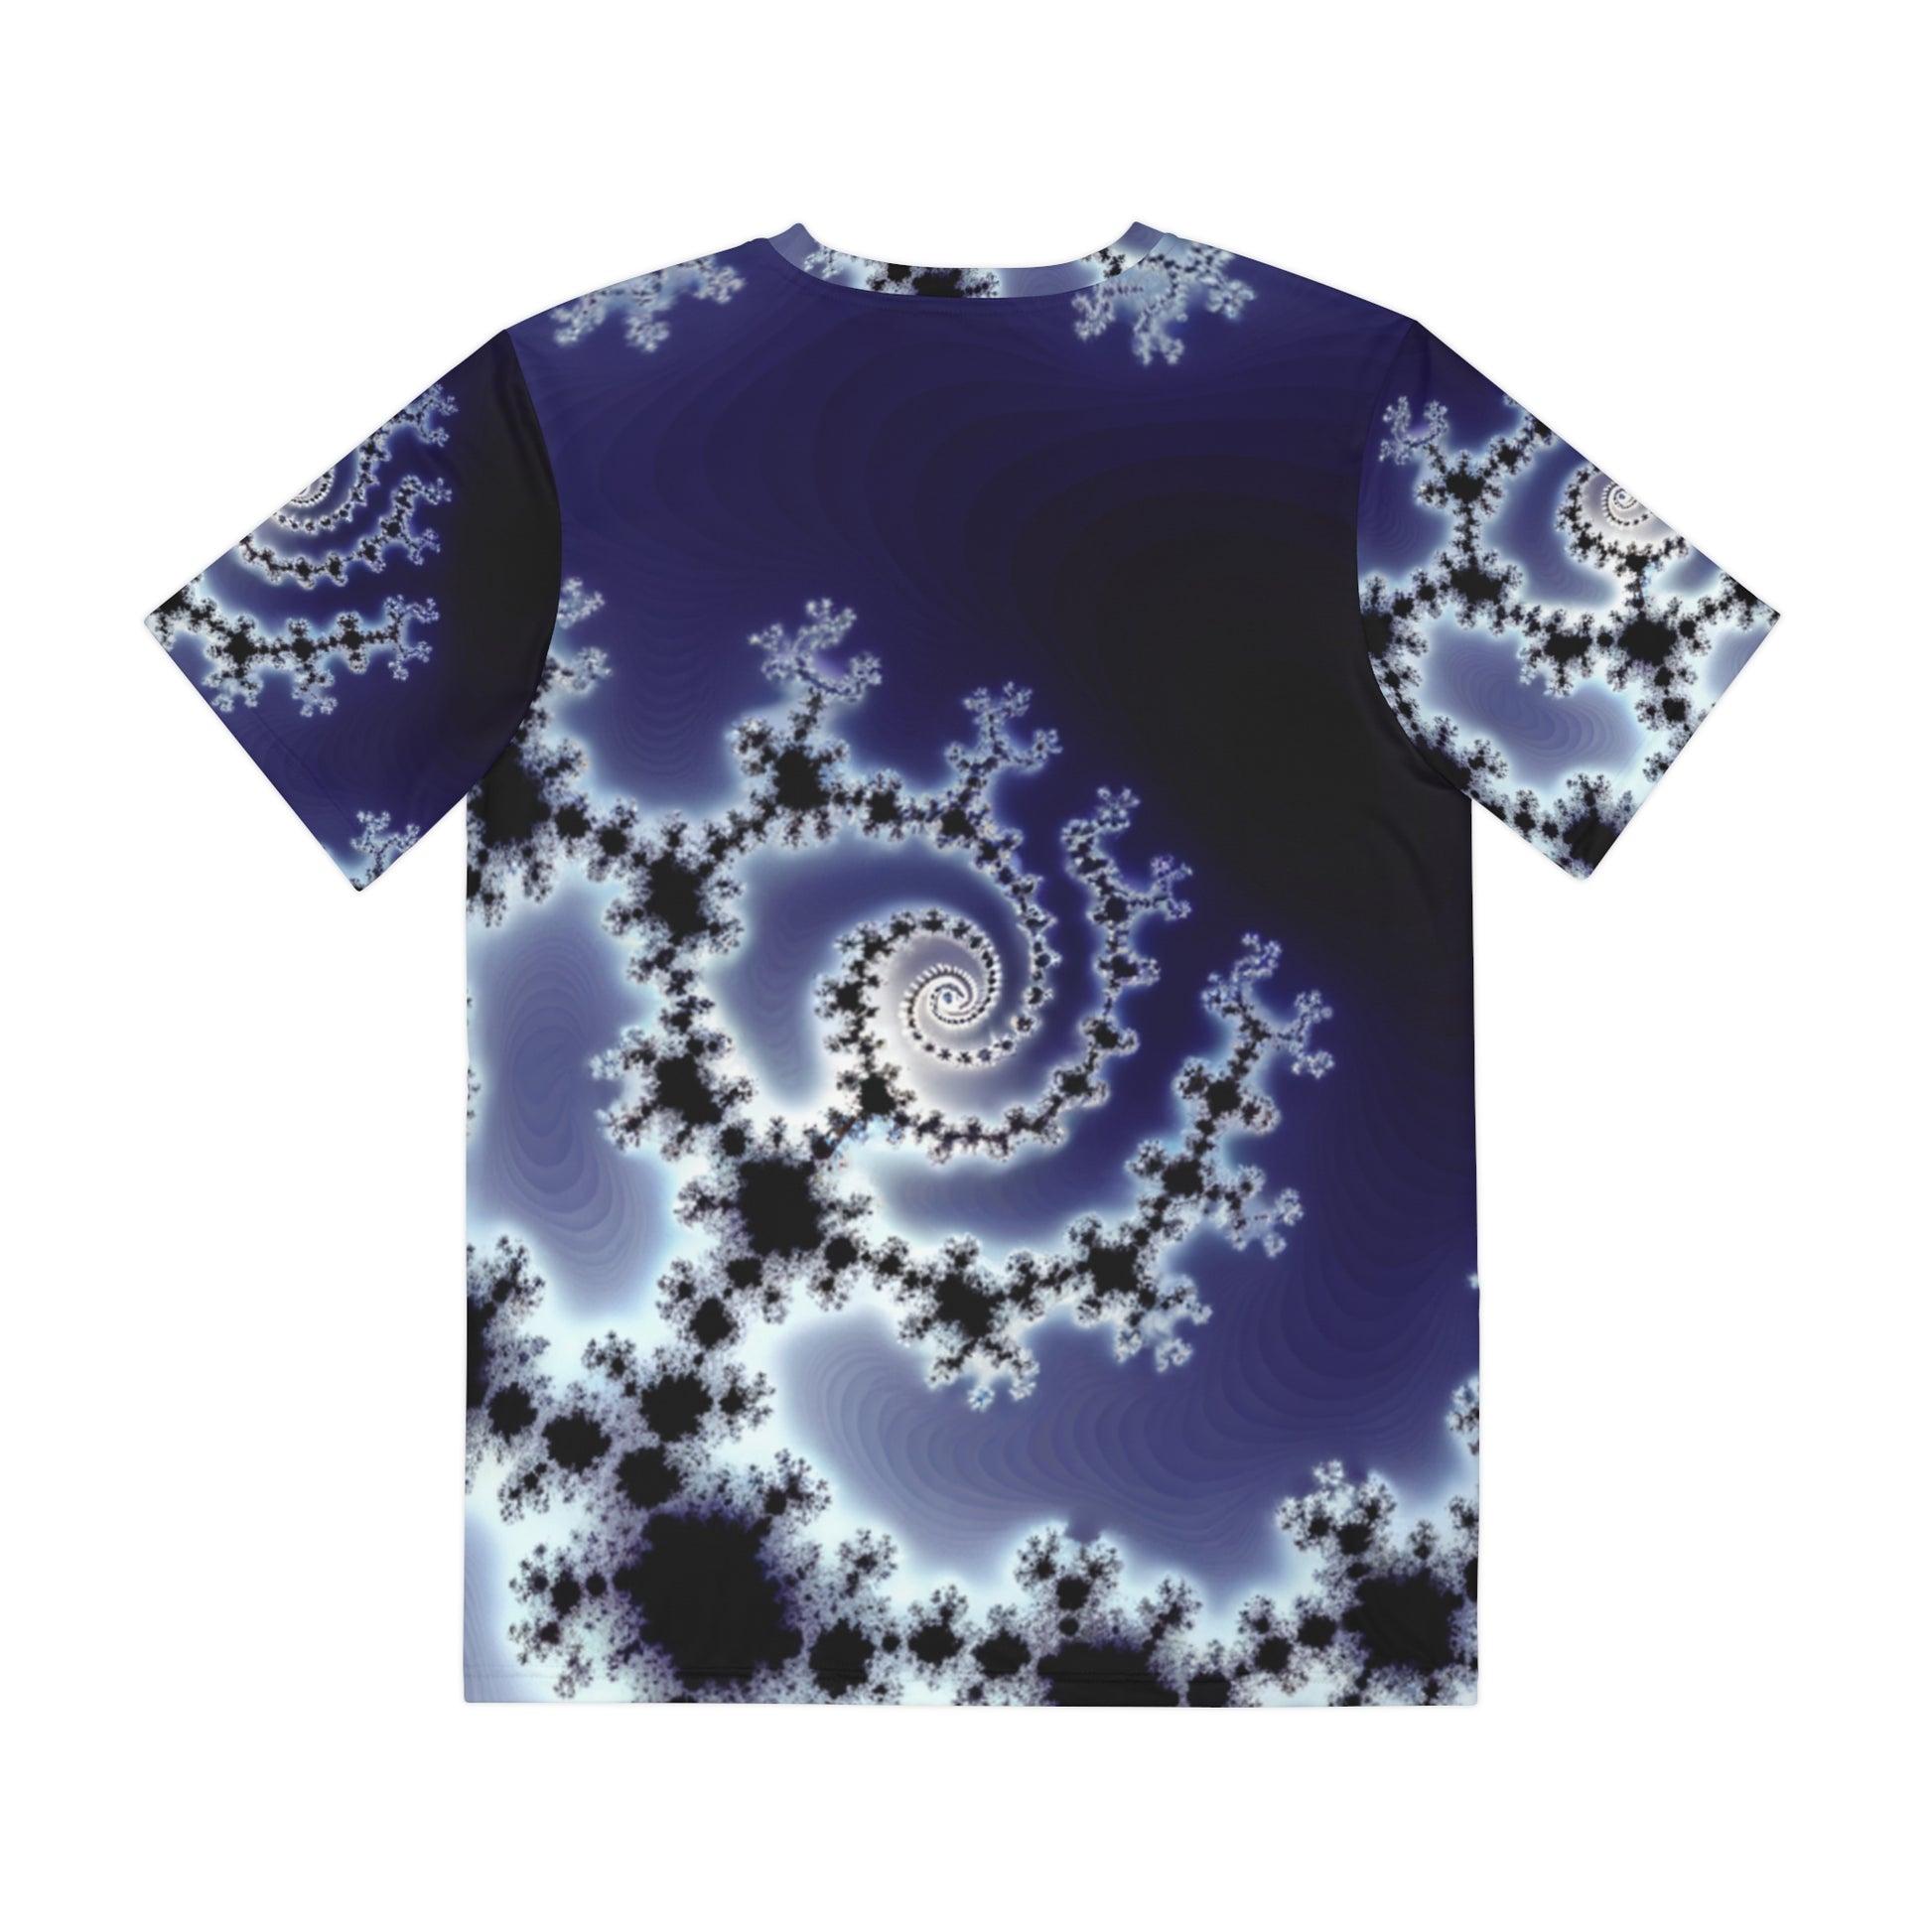 Back  view of the Celestial Fractal Elegance Crewneck Pullover All-Over Print Short-Sleeved Shirt purple black white fractal pattern